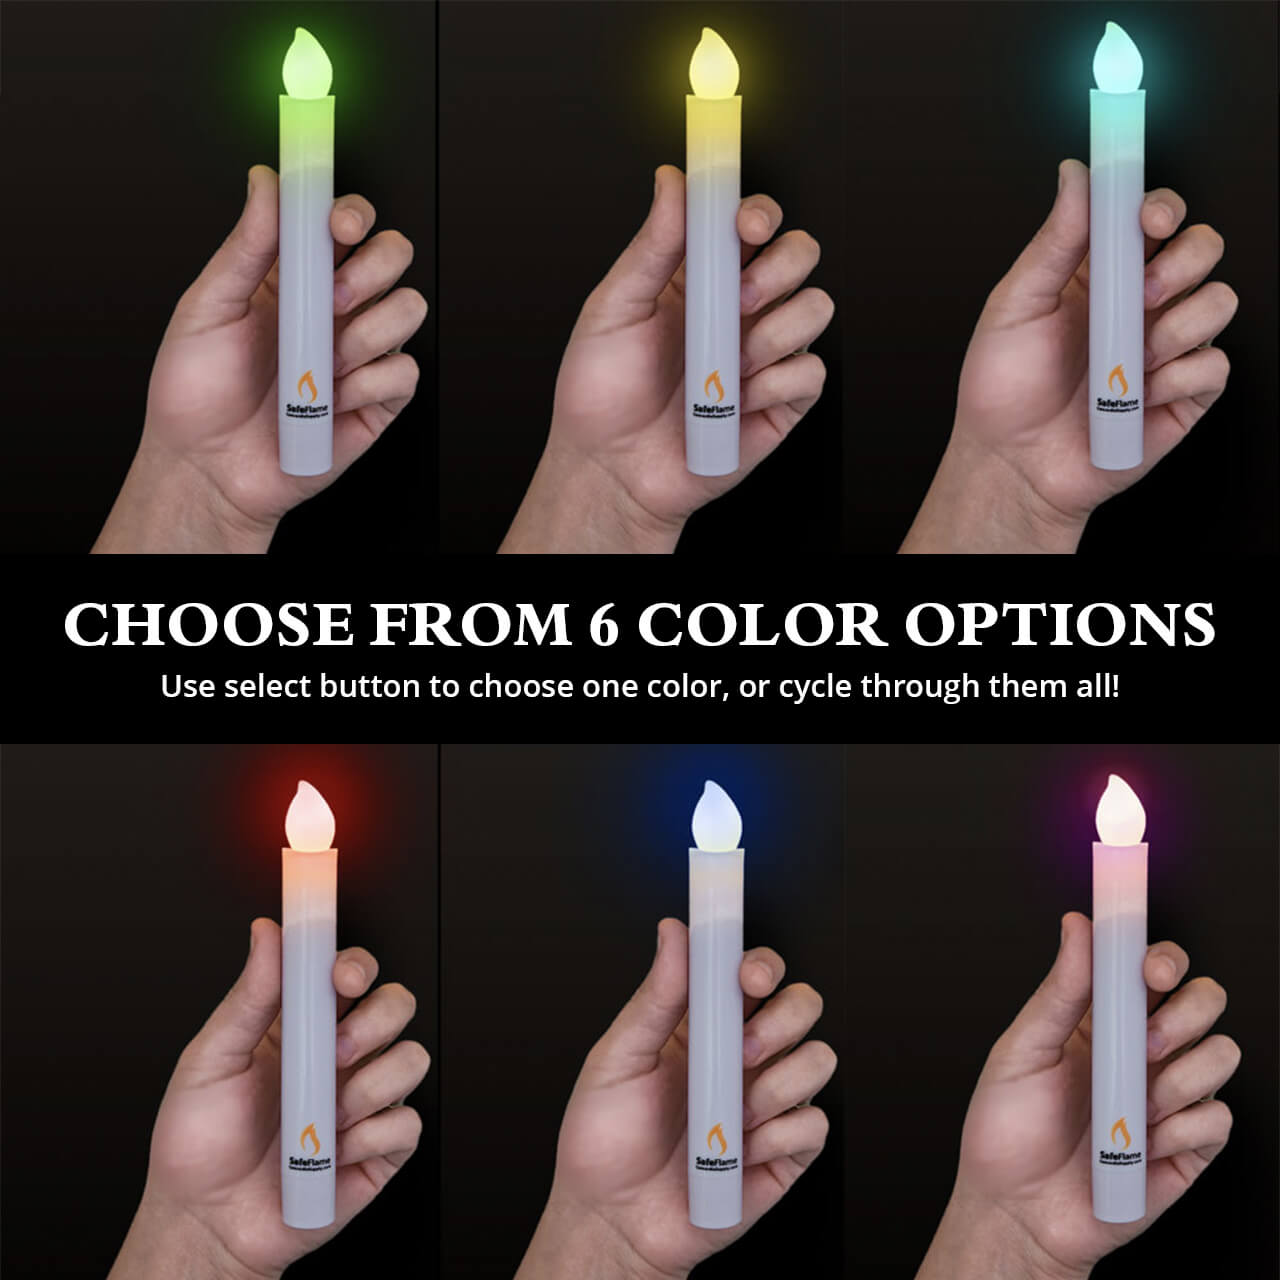 Multi-color options